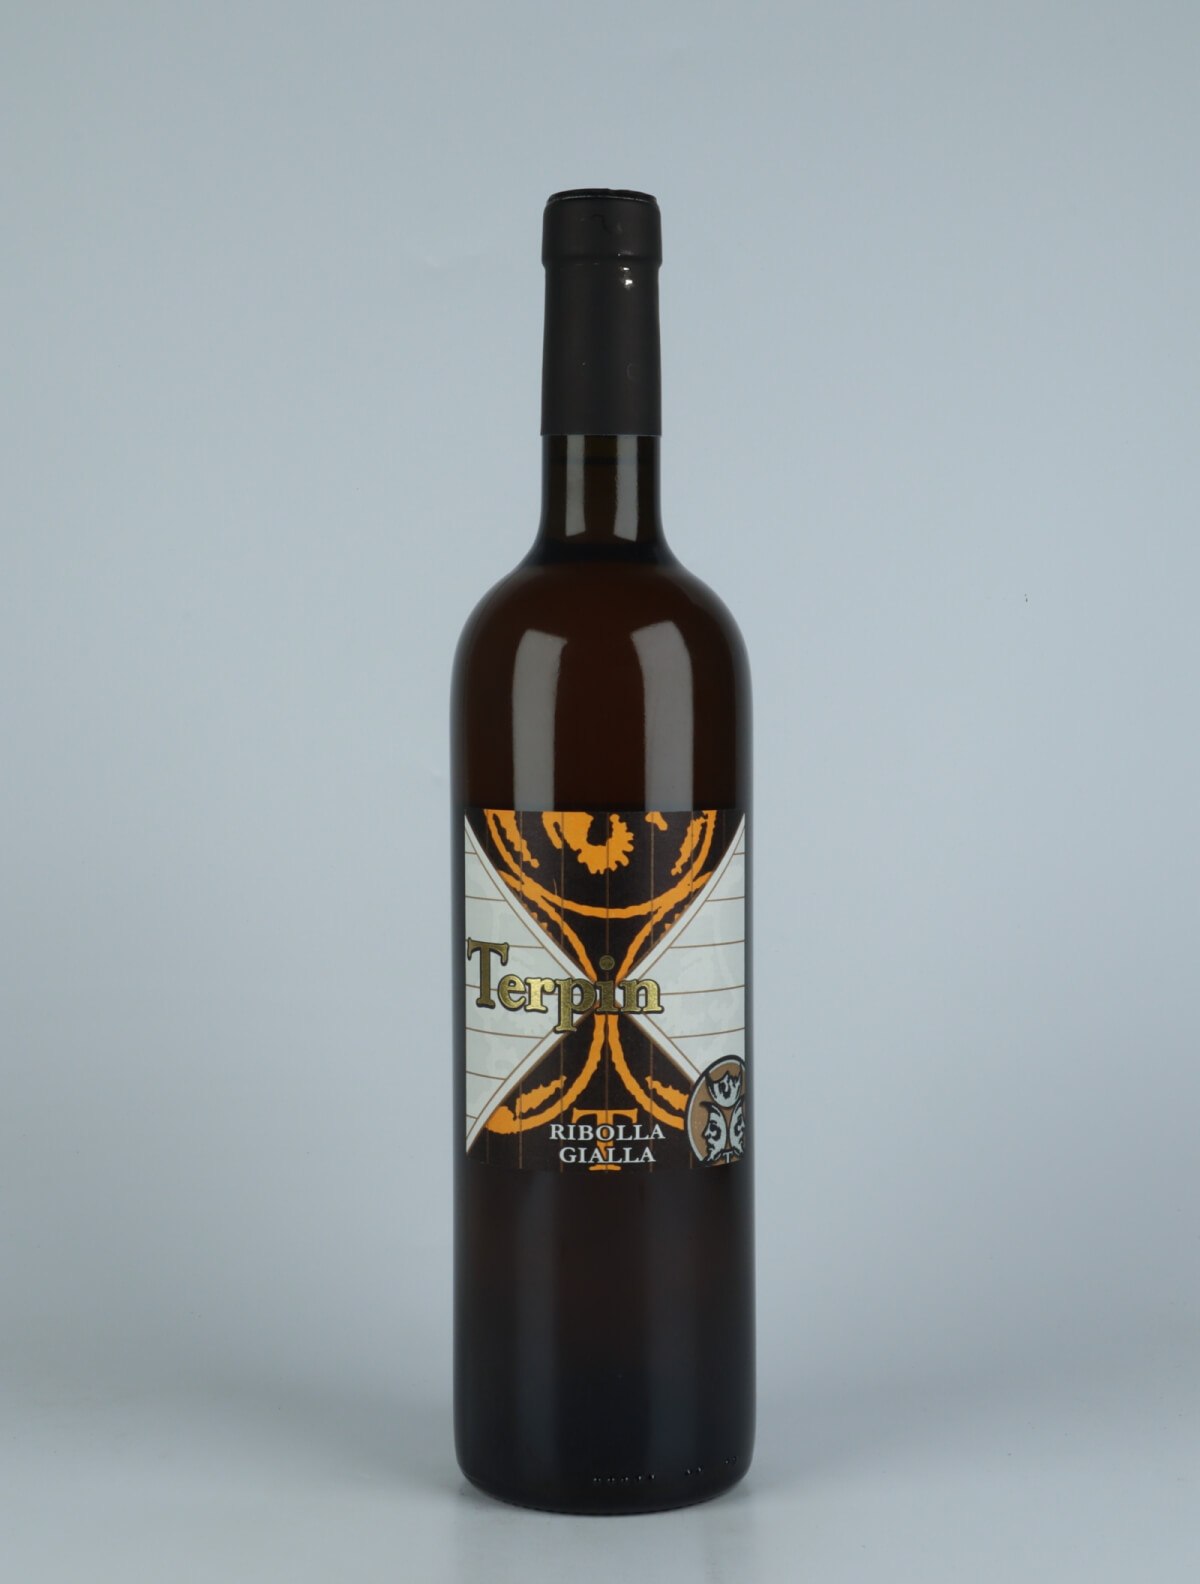 En flaske 2018 Ribolla Gialla Orange vin fra Franco Terpin, Friuli i Italien